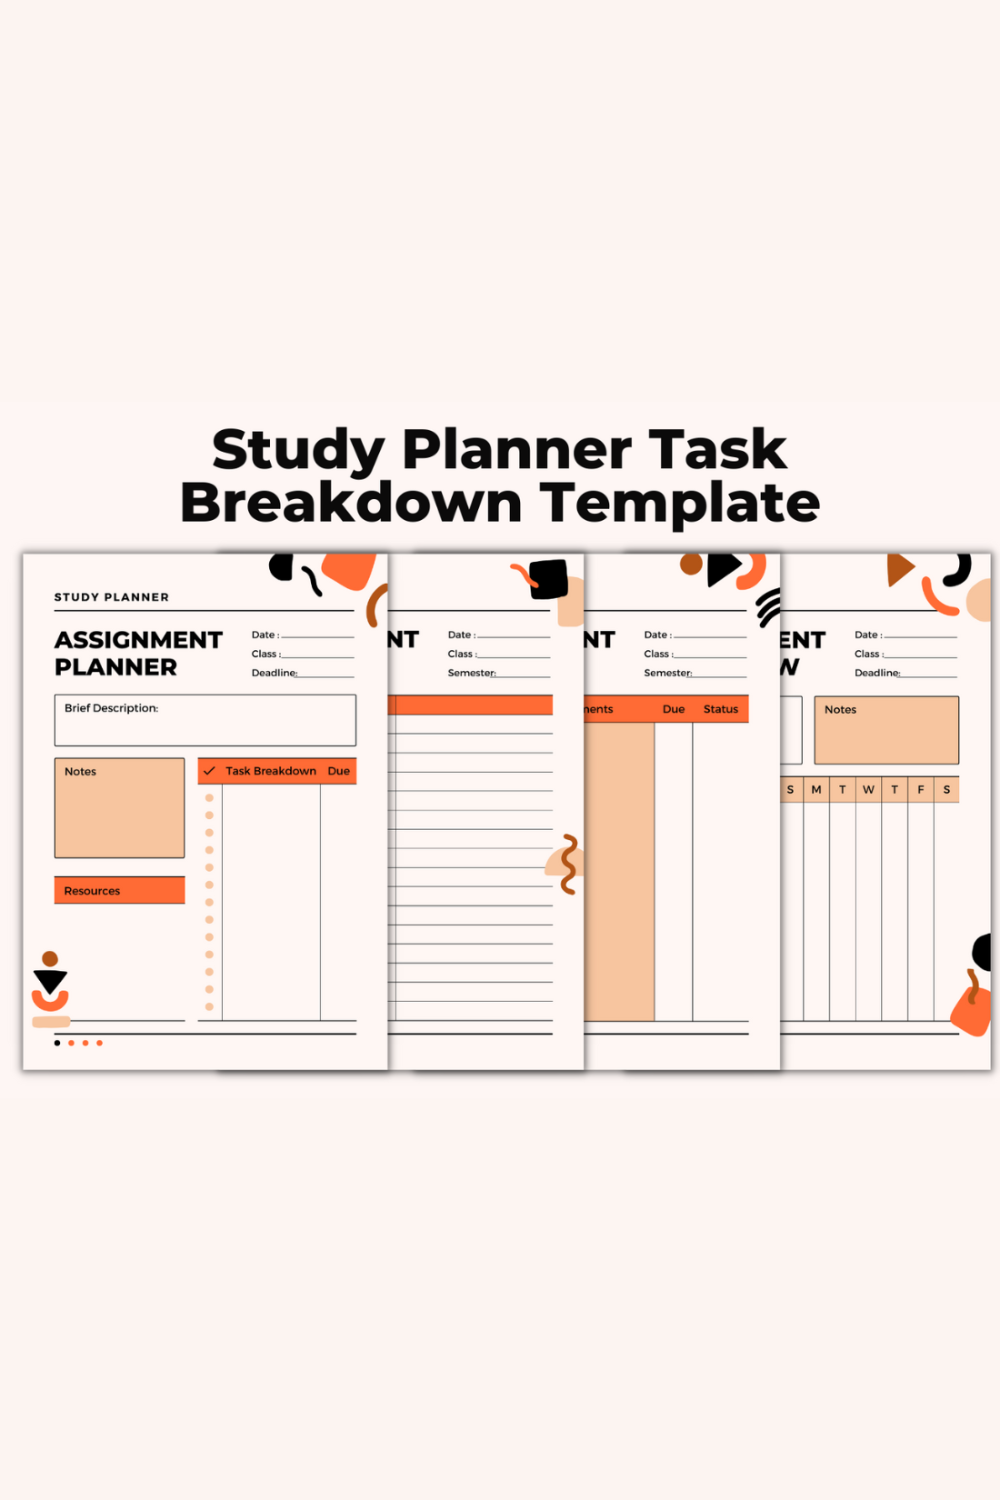 Study Planner Task Breakdown Canva Template pinterest preview image.